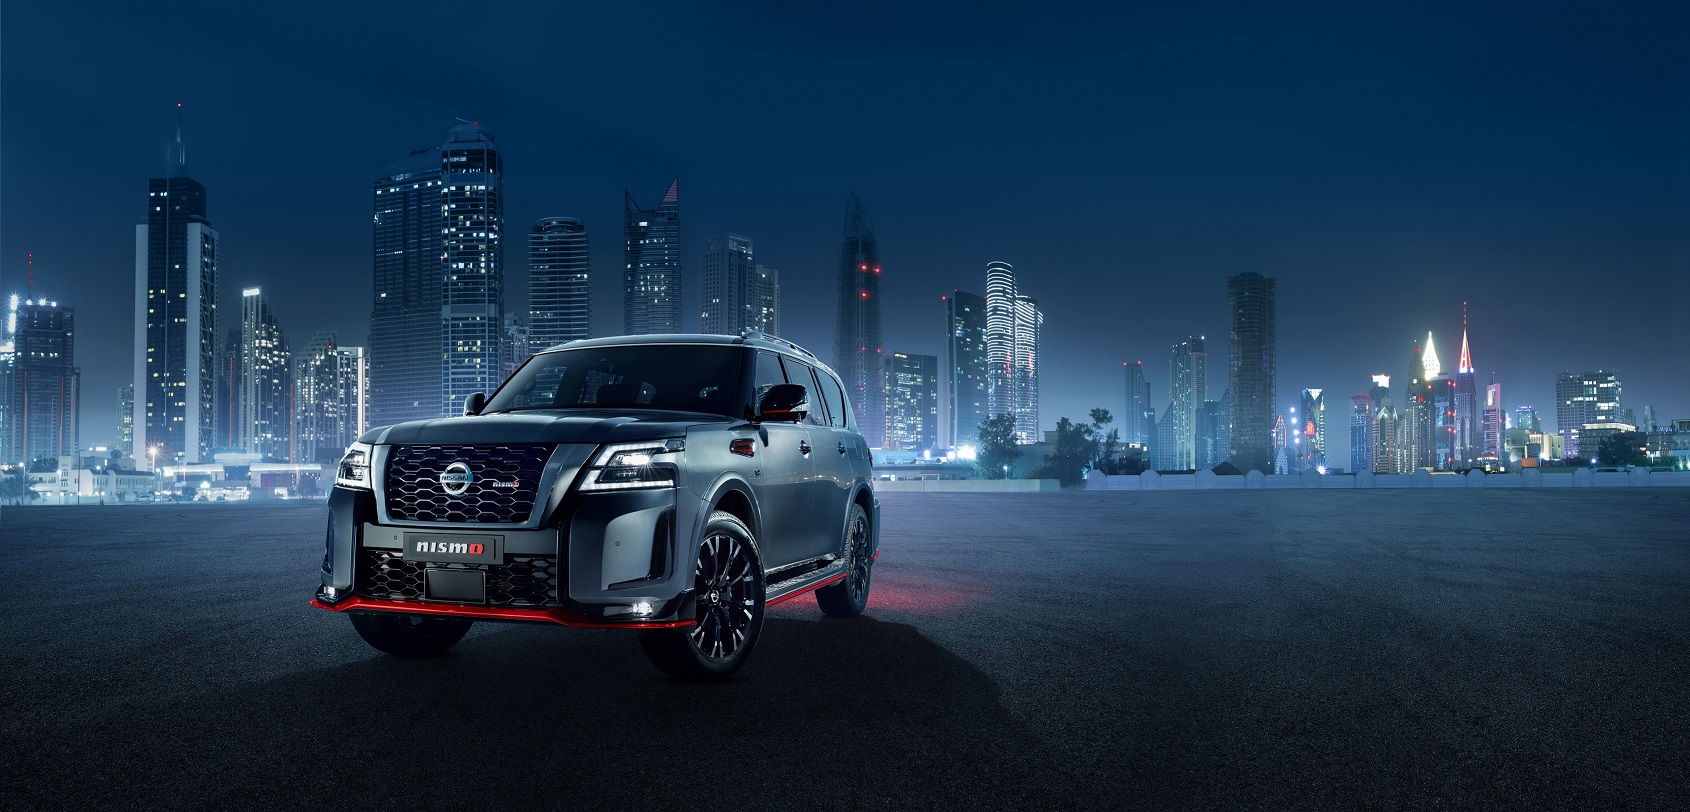 Nissan of Arabian Automobiles introduces 2021 Nissan Patrol NISMO